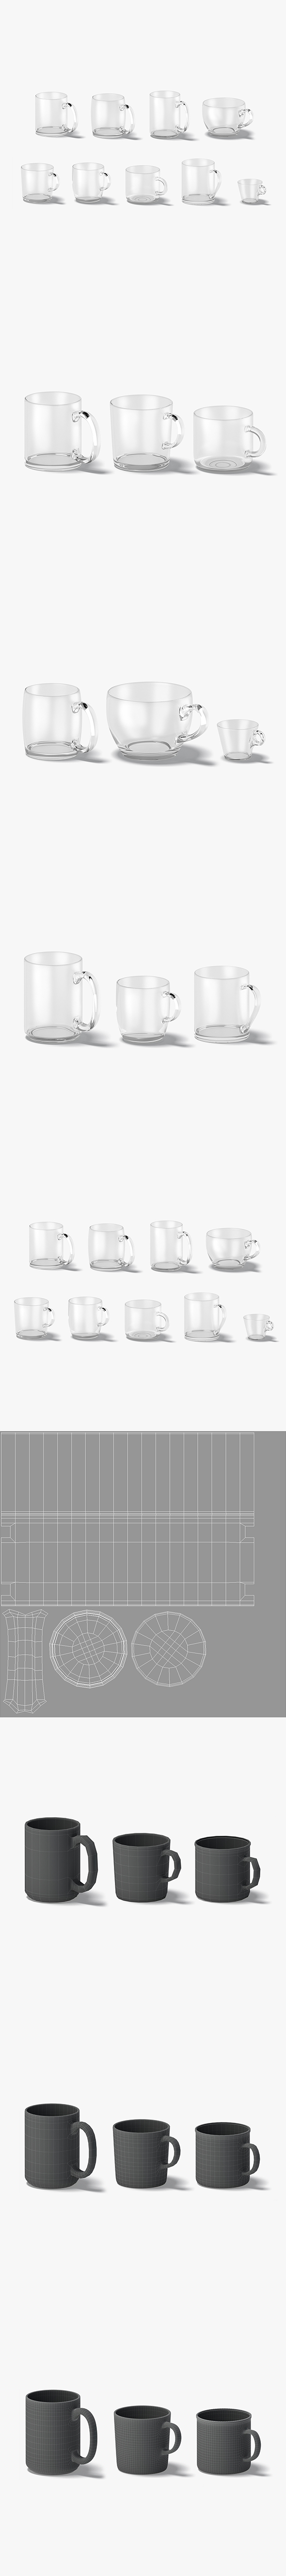 9 Glass Mug Shapes - transparent mugs various forms and sizes